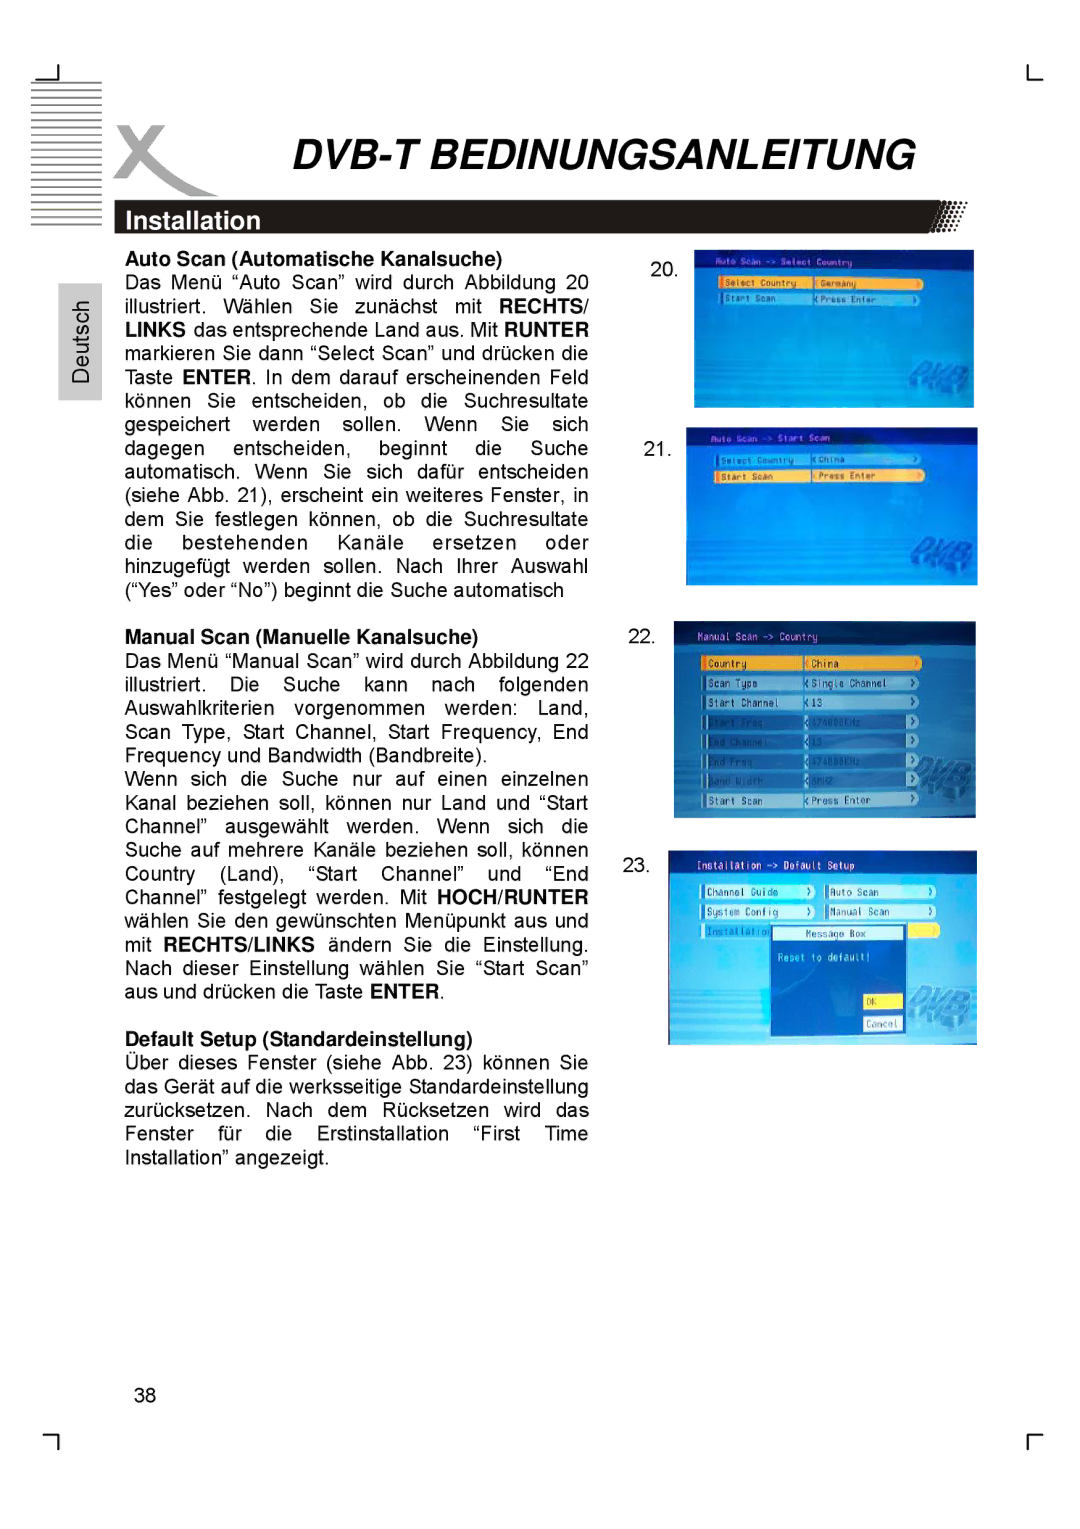 Xoro HTC1900D manual Installation, Auto Scan Automatische Kanalsuche, Manual Scan Manuelle Kanalsuche 